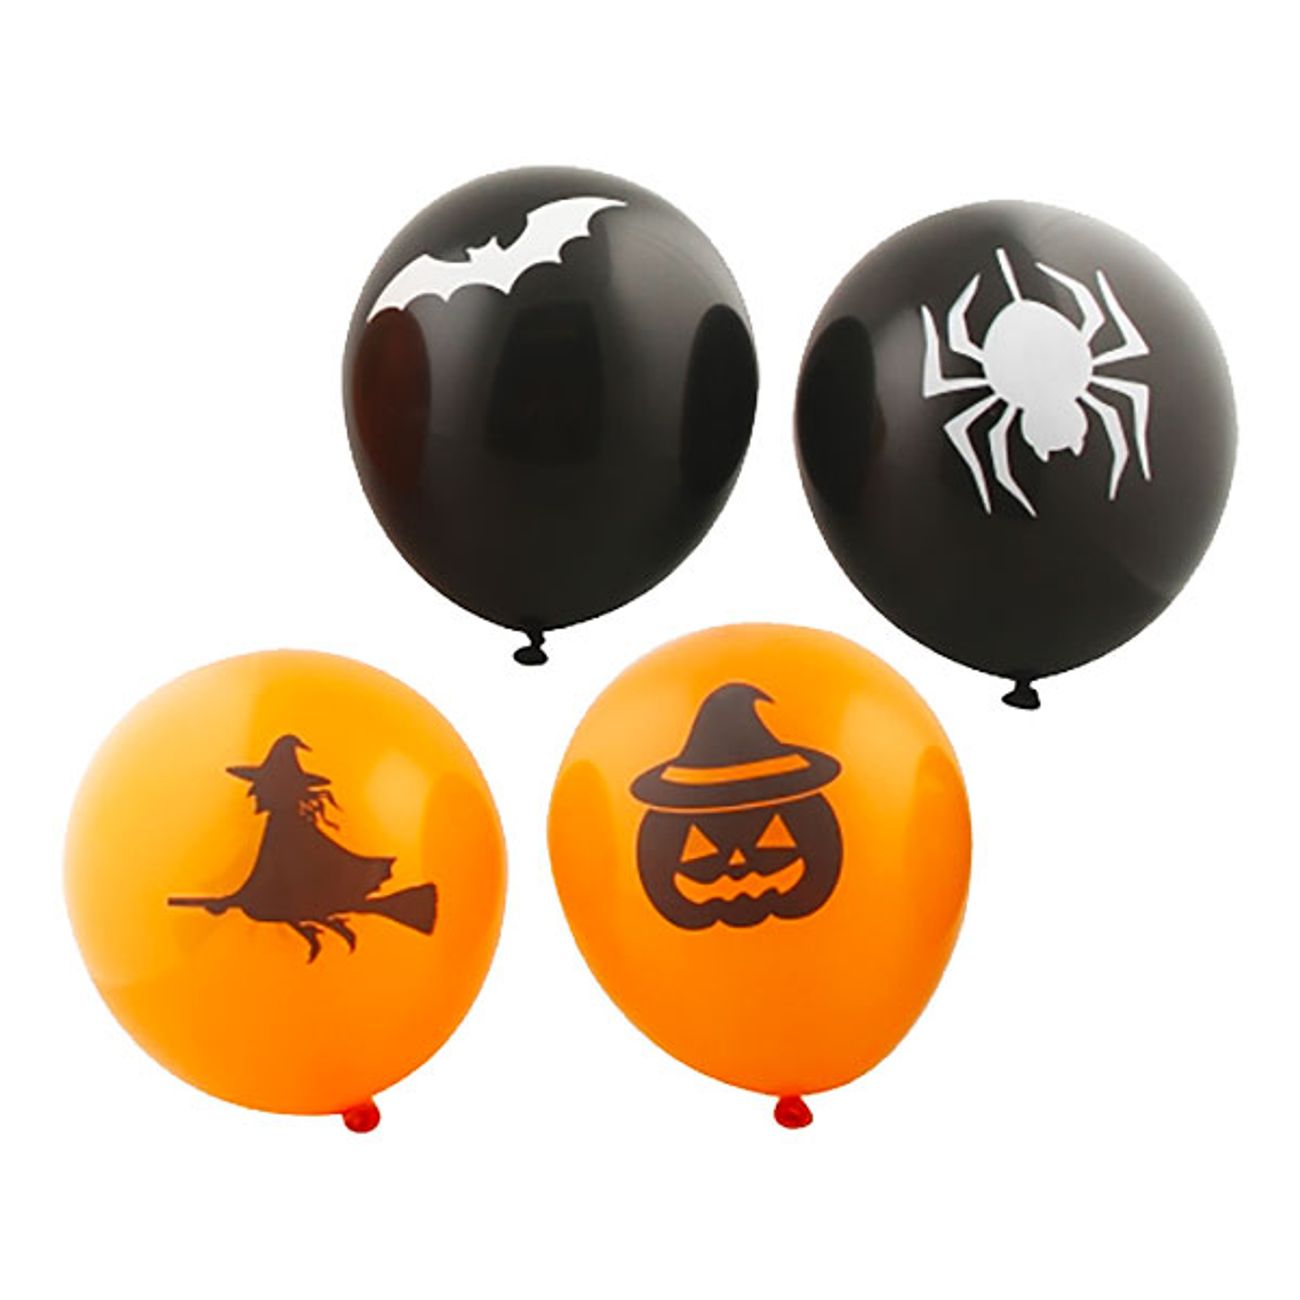 ballonger-halloween-svartorange-1